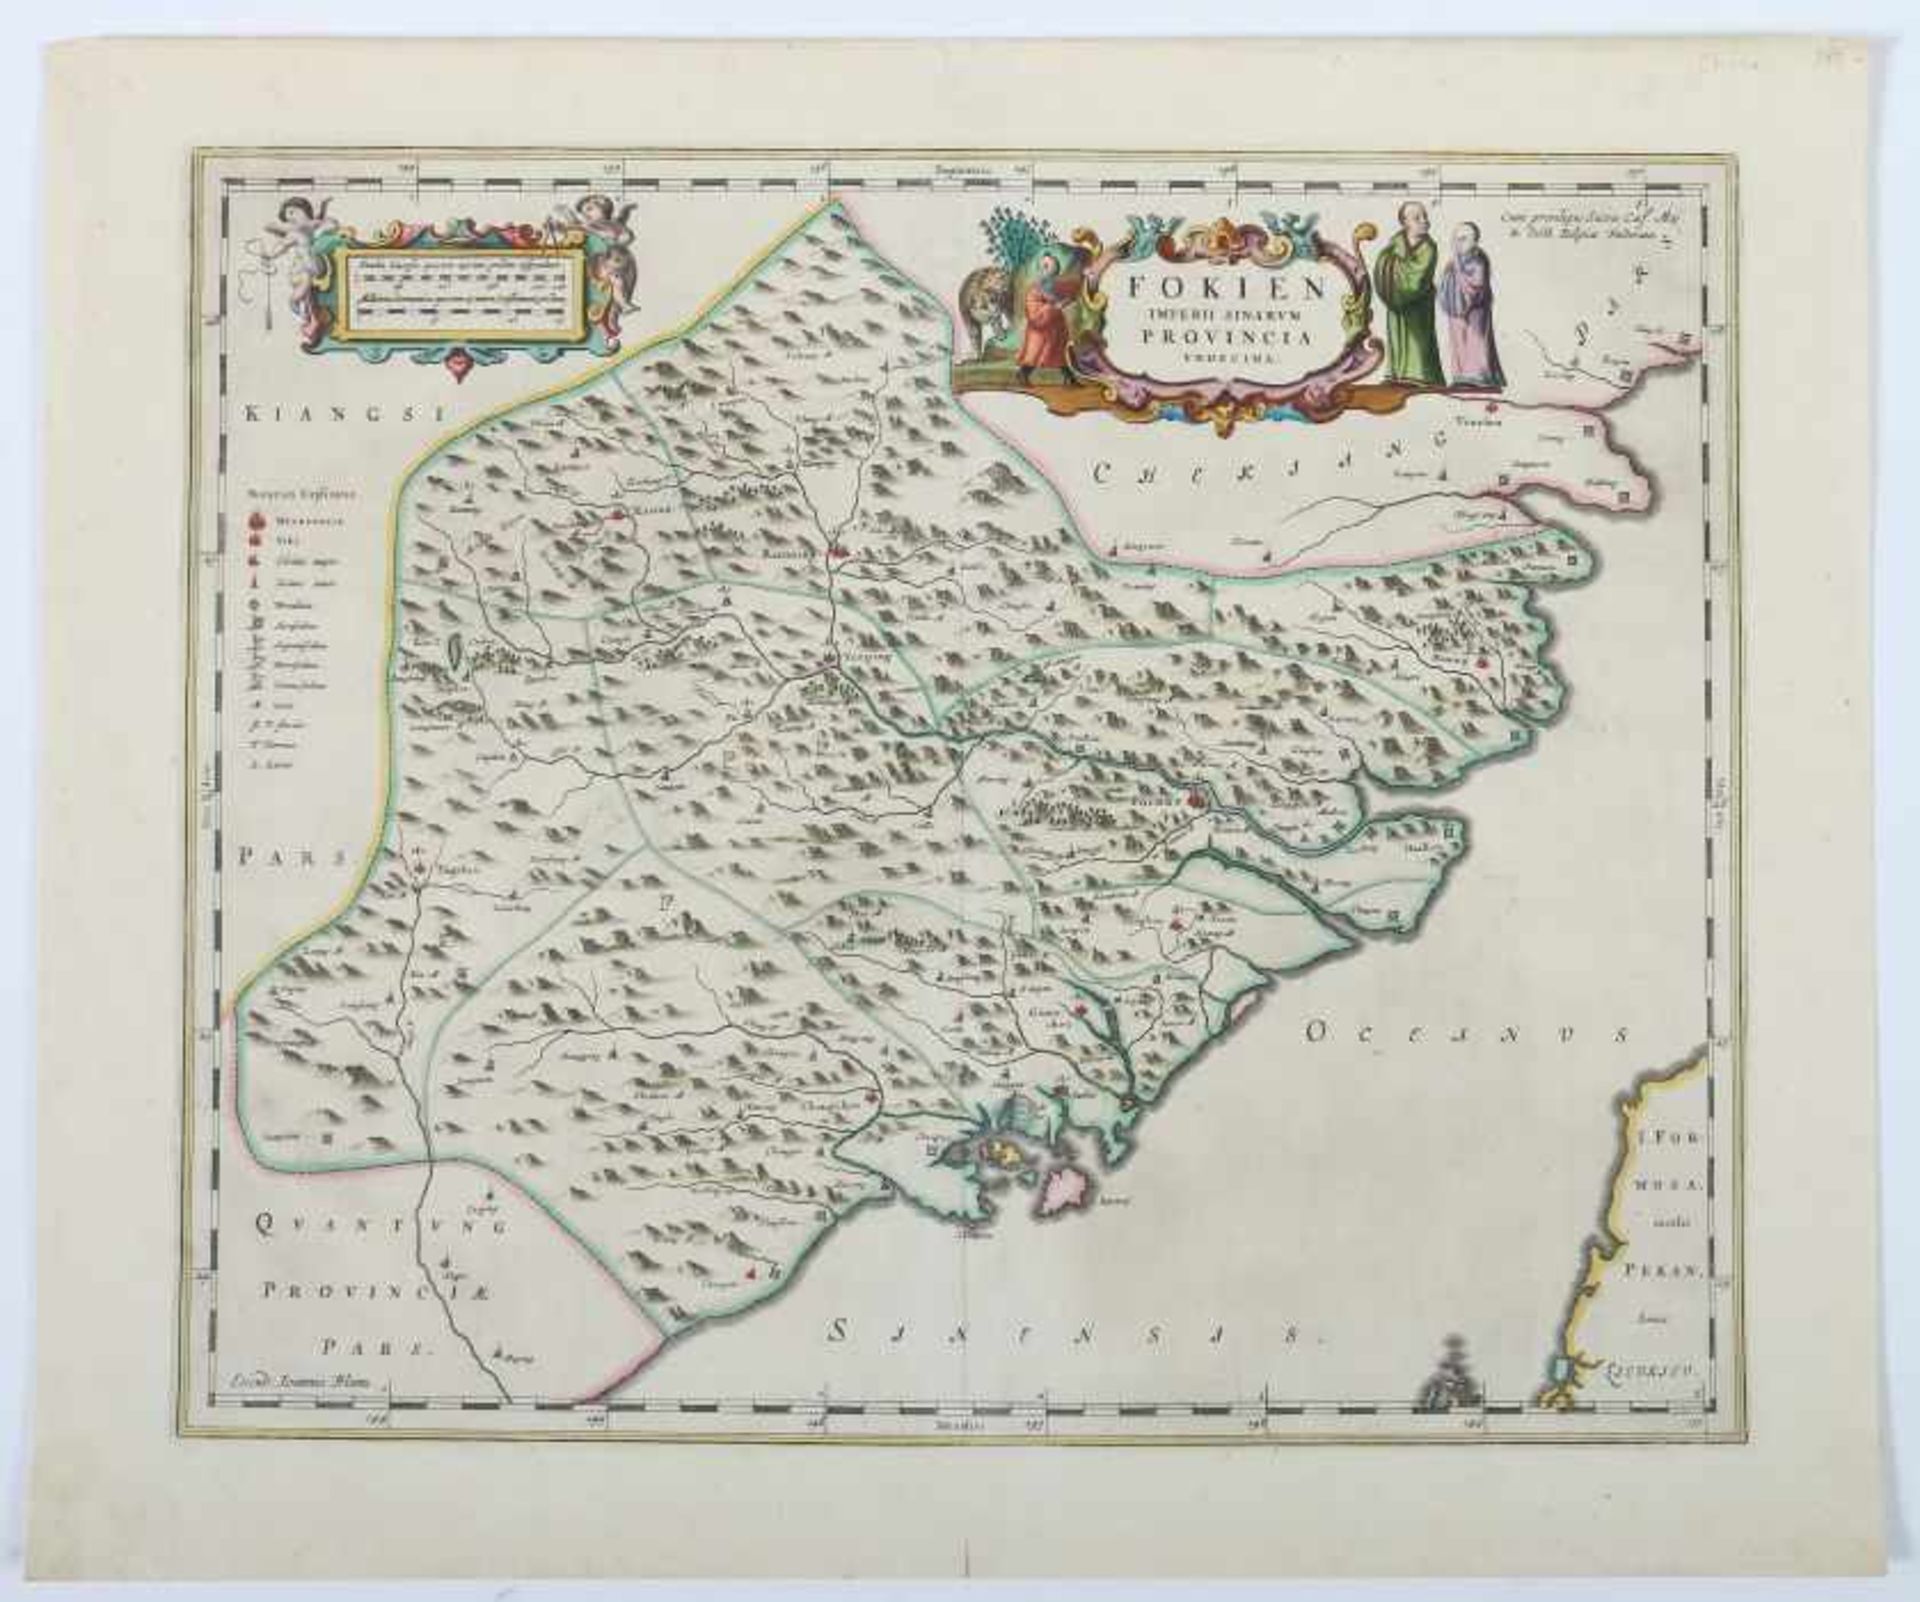 Blaeu, Joan 1599 - 1673. "Fokien, Imperii Sinarum, Provincia undecima", chinesische Provinz - Image 2 of 2